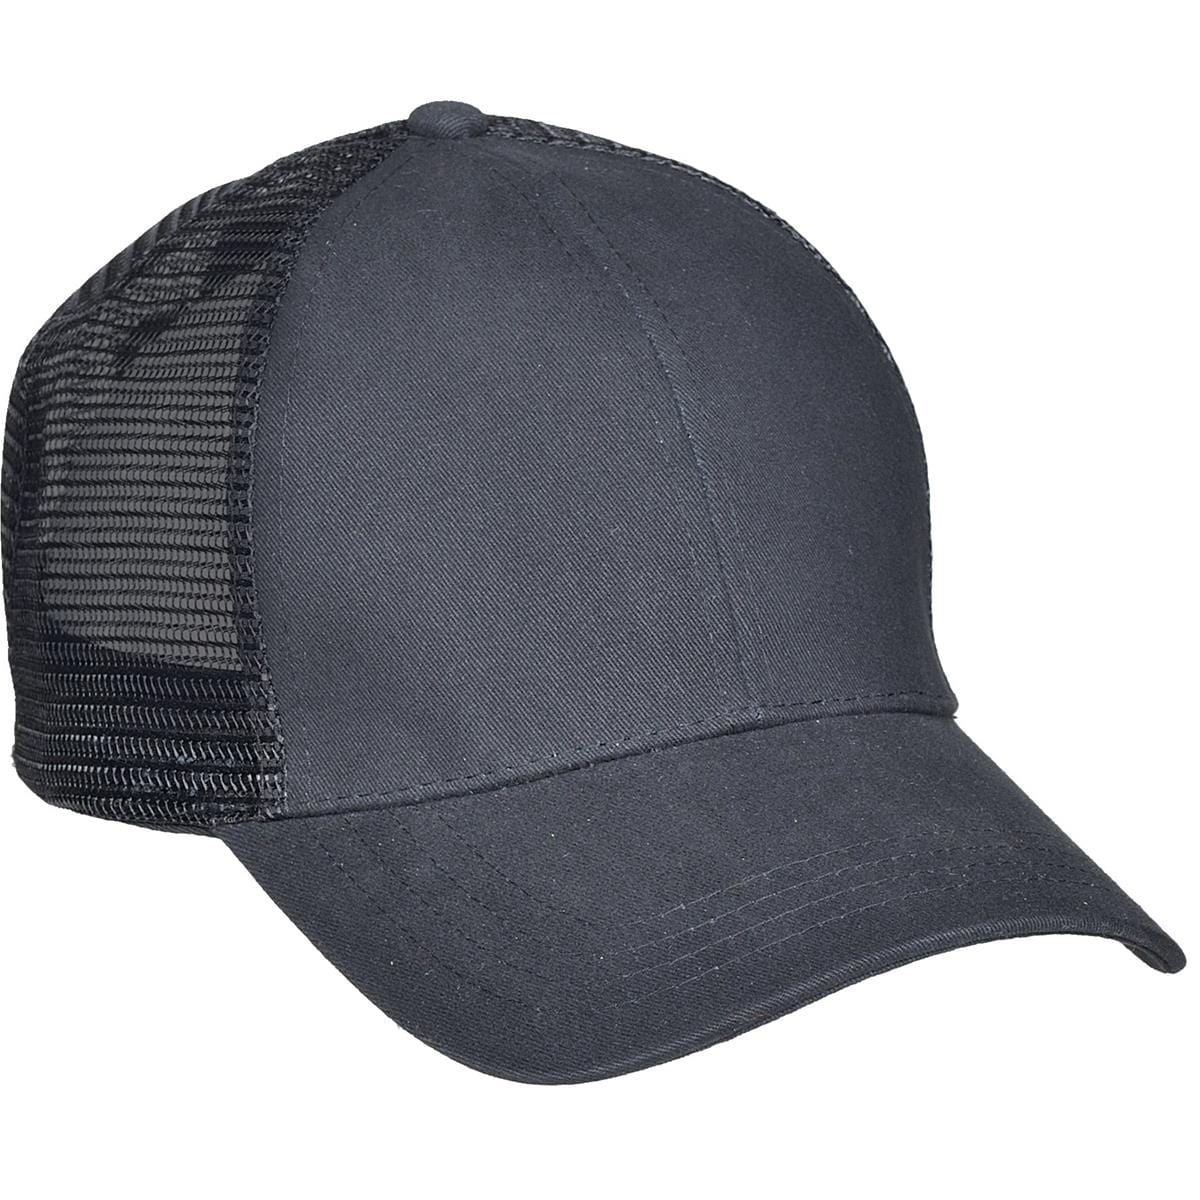 BustedTees Falcon Outline Back Mesh Hat Casual Wear - Baseball Cap for Men  Breathable Mesh Back Adjustable Snapback Strap